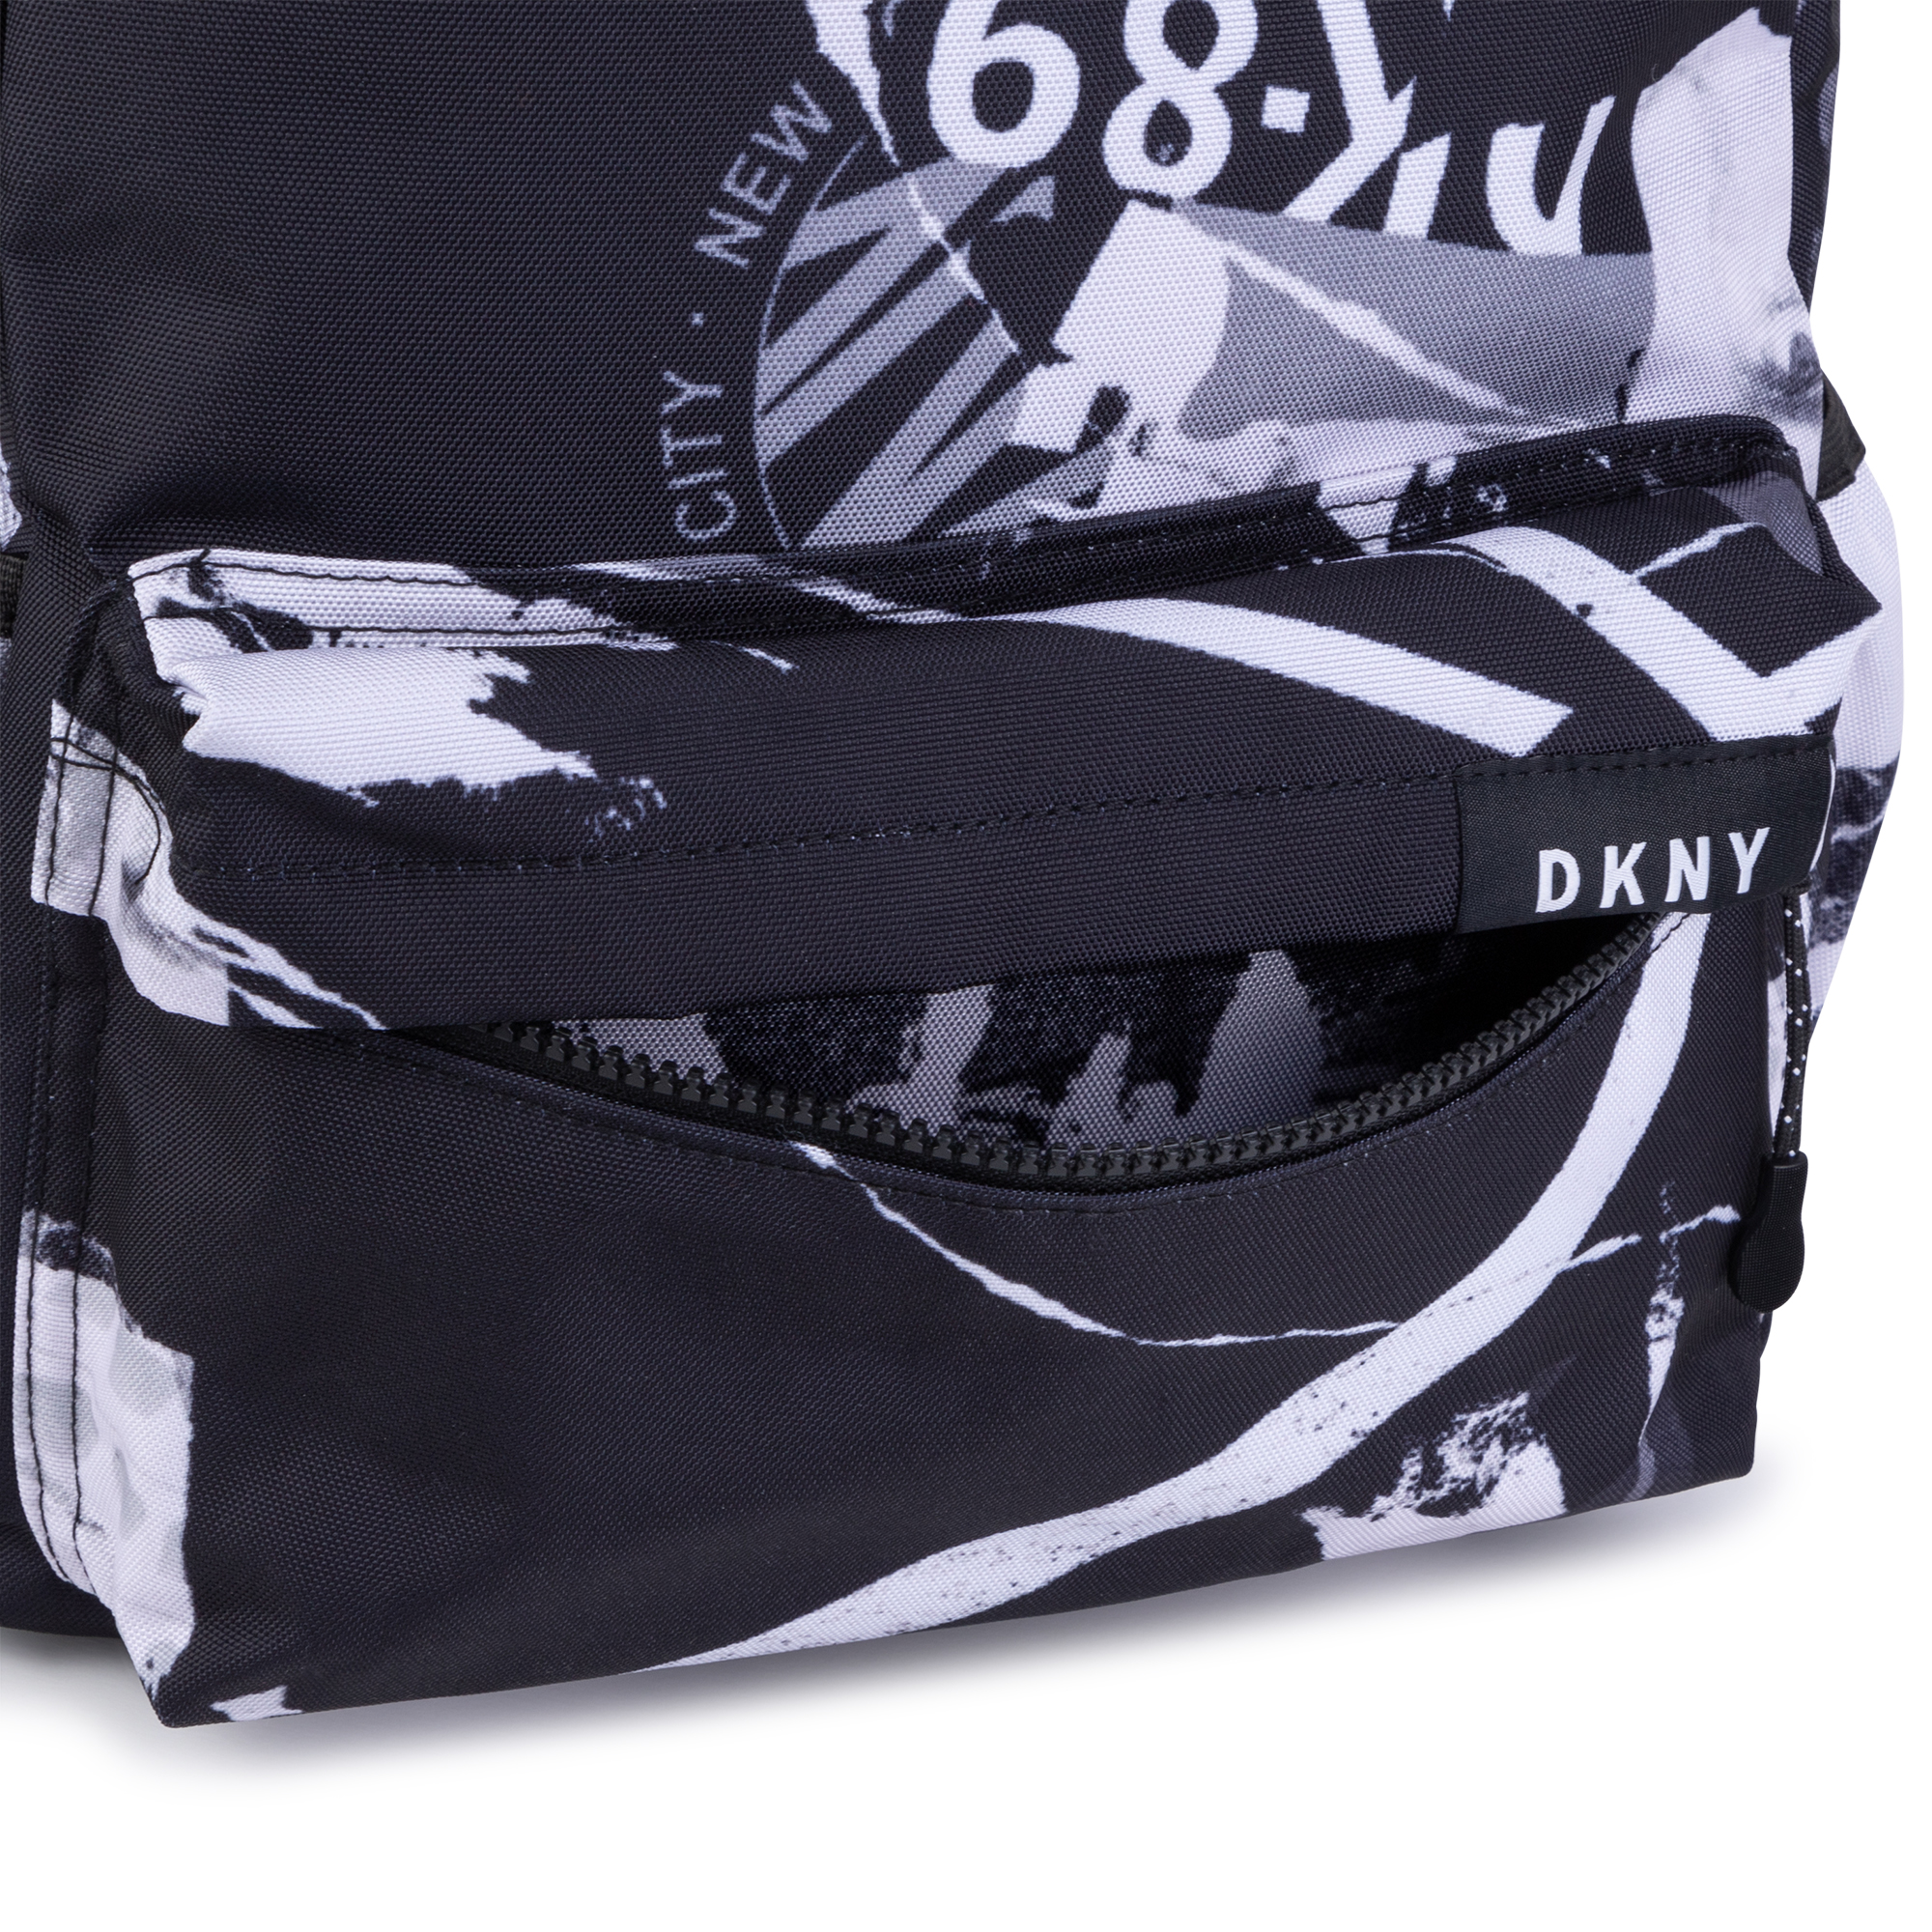 Printed rucksack DKNY for BOY